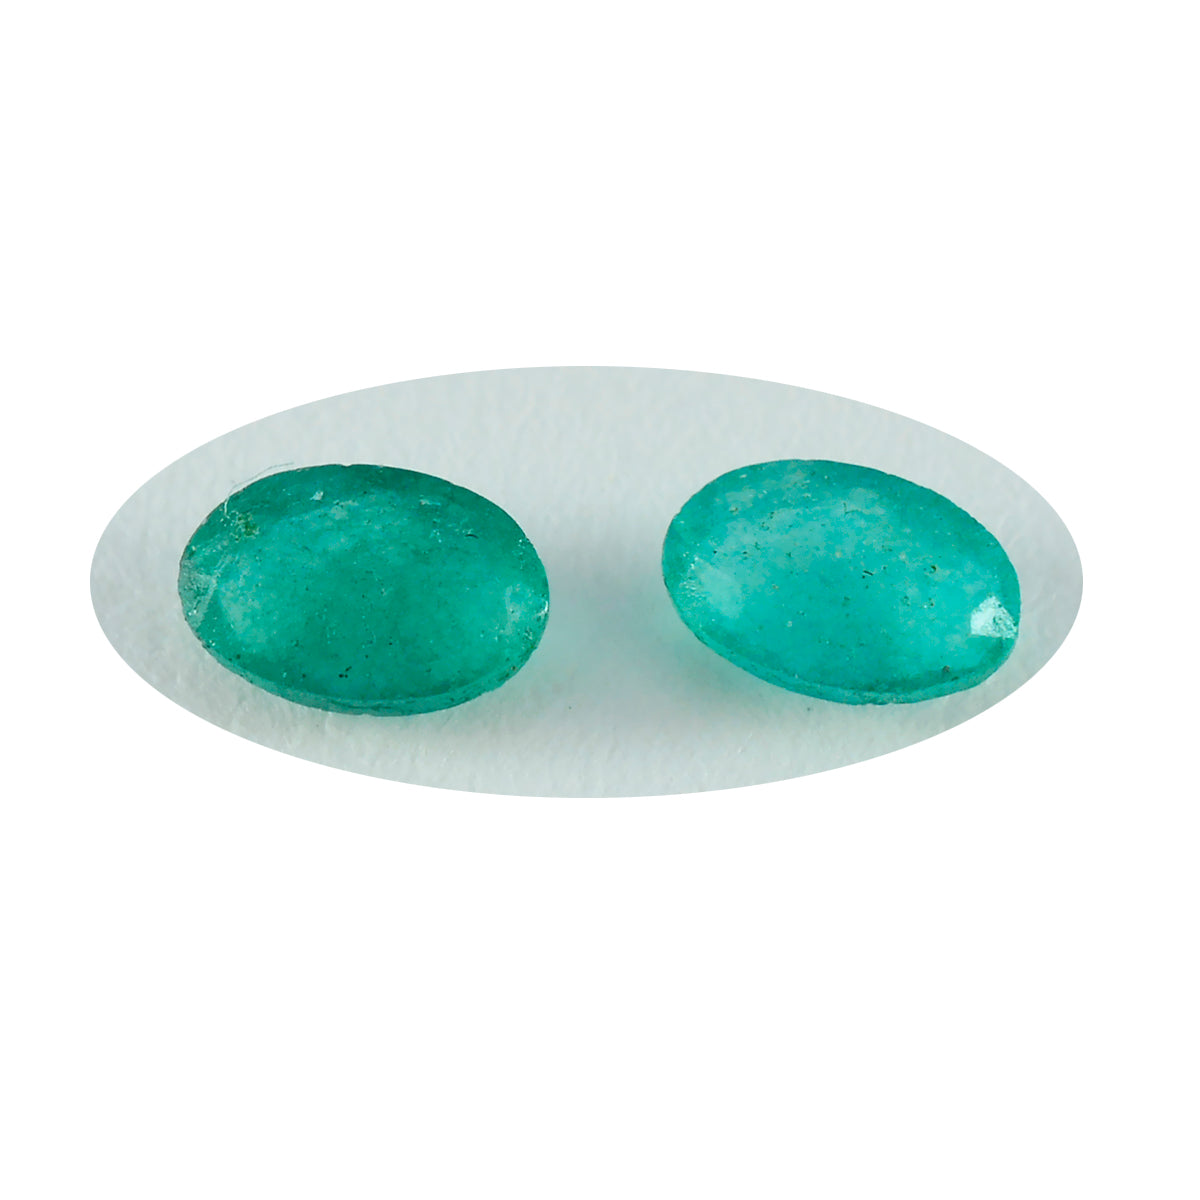 riyogems 1 st naturgrön jaspis fasetterad 6x8 mm oval form av hög kvalitet pärla